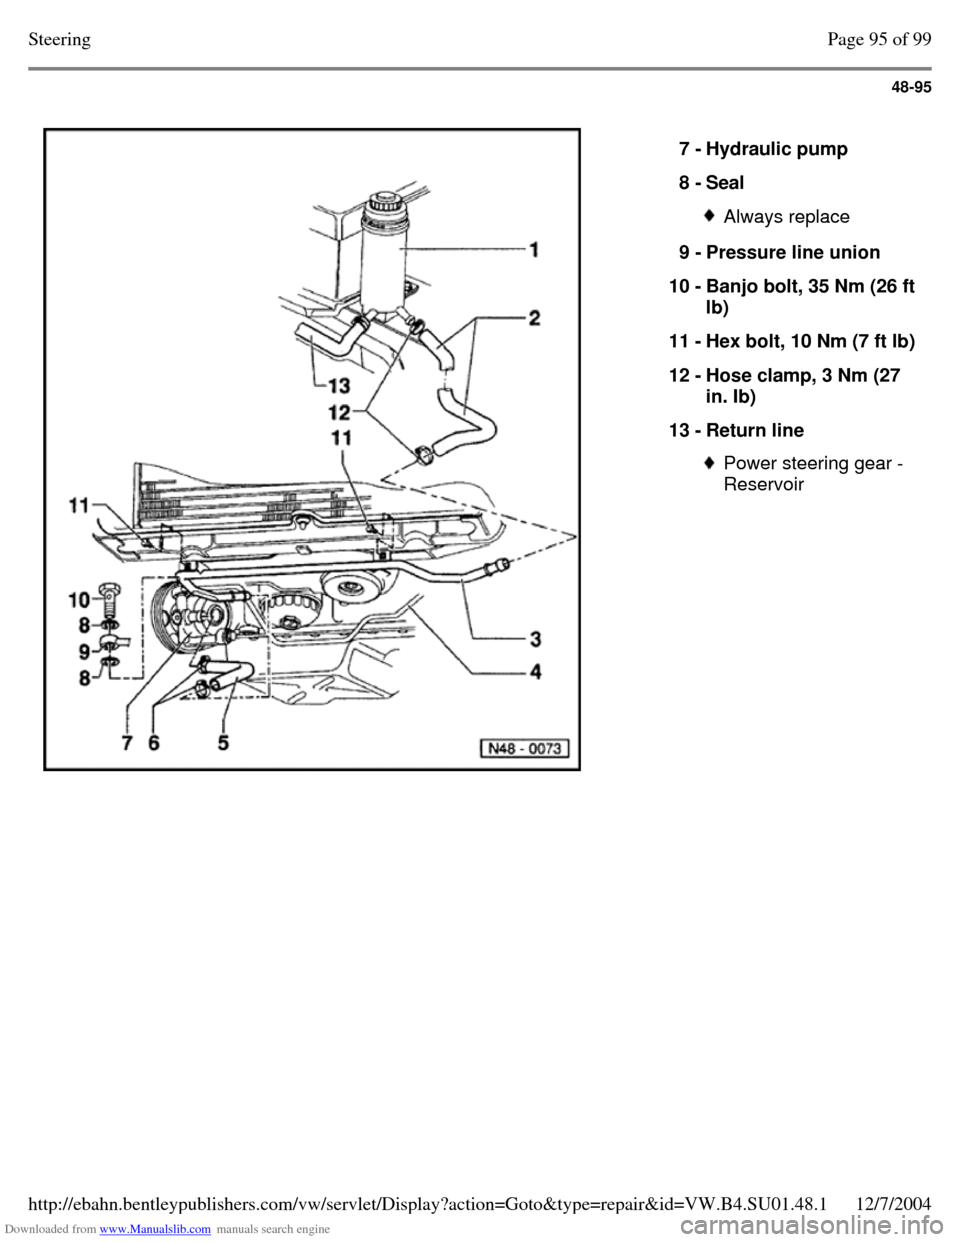 VOLKSWAGEN PASSAT 1995 B3, B4 / 3.G Service Workshop Manual Downloaded from www.Manualslib.com manuals search engine 48-95
   
7 - Hydraulic pump 
8 - Seal  Always replace 9 - Pressure line union 
10 - Banjo bolt, 35 Nm (26 ft lb) 
11 - Hex bolt, 10 Nm (7 ft l